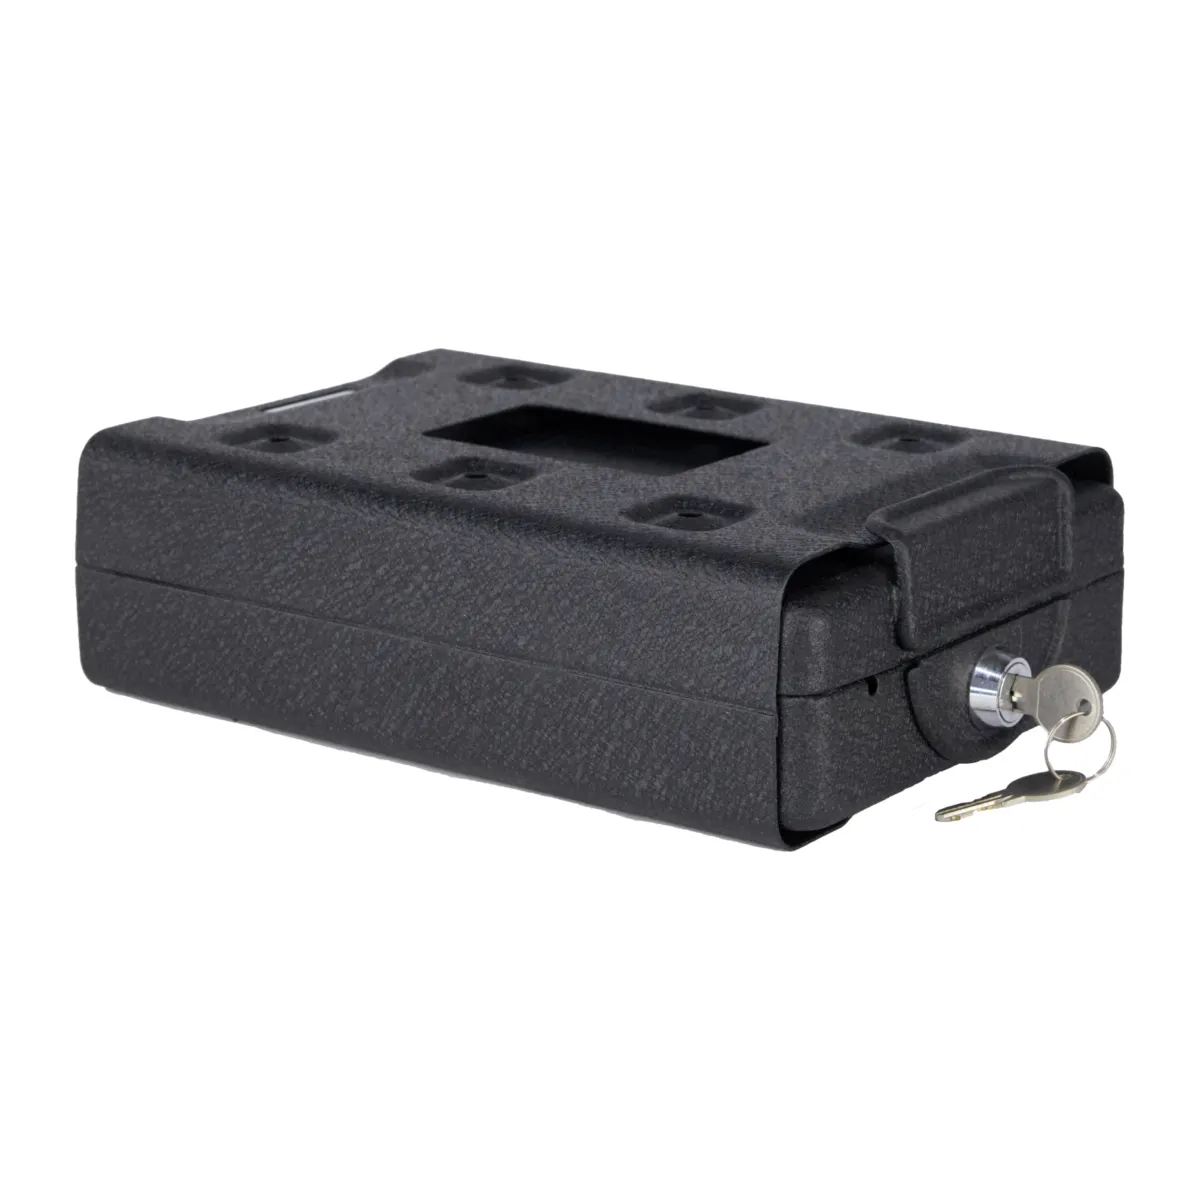 Caja de Seguridad portátil para pistola, caja de seguridad con Cable para coche, Mini caja de viaje